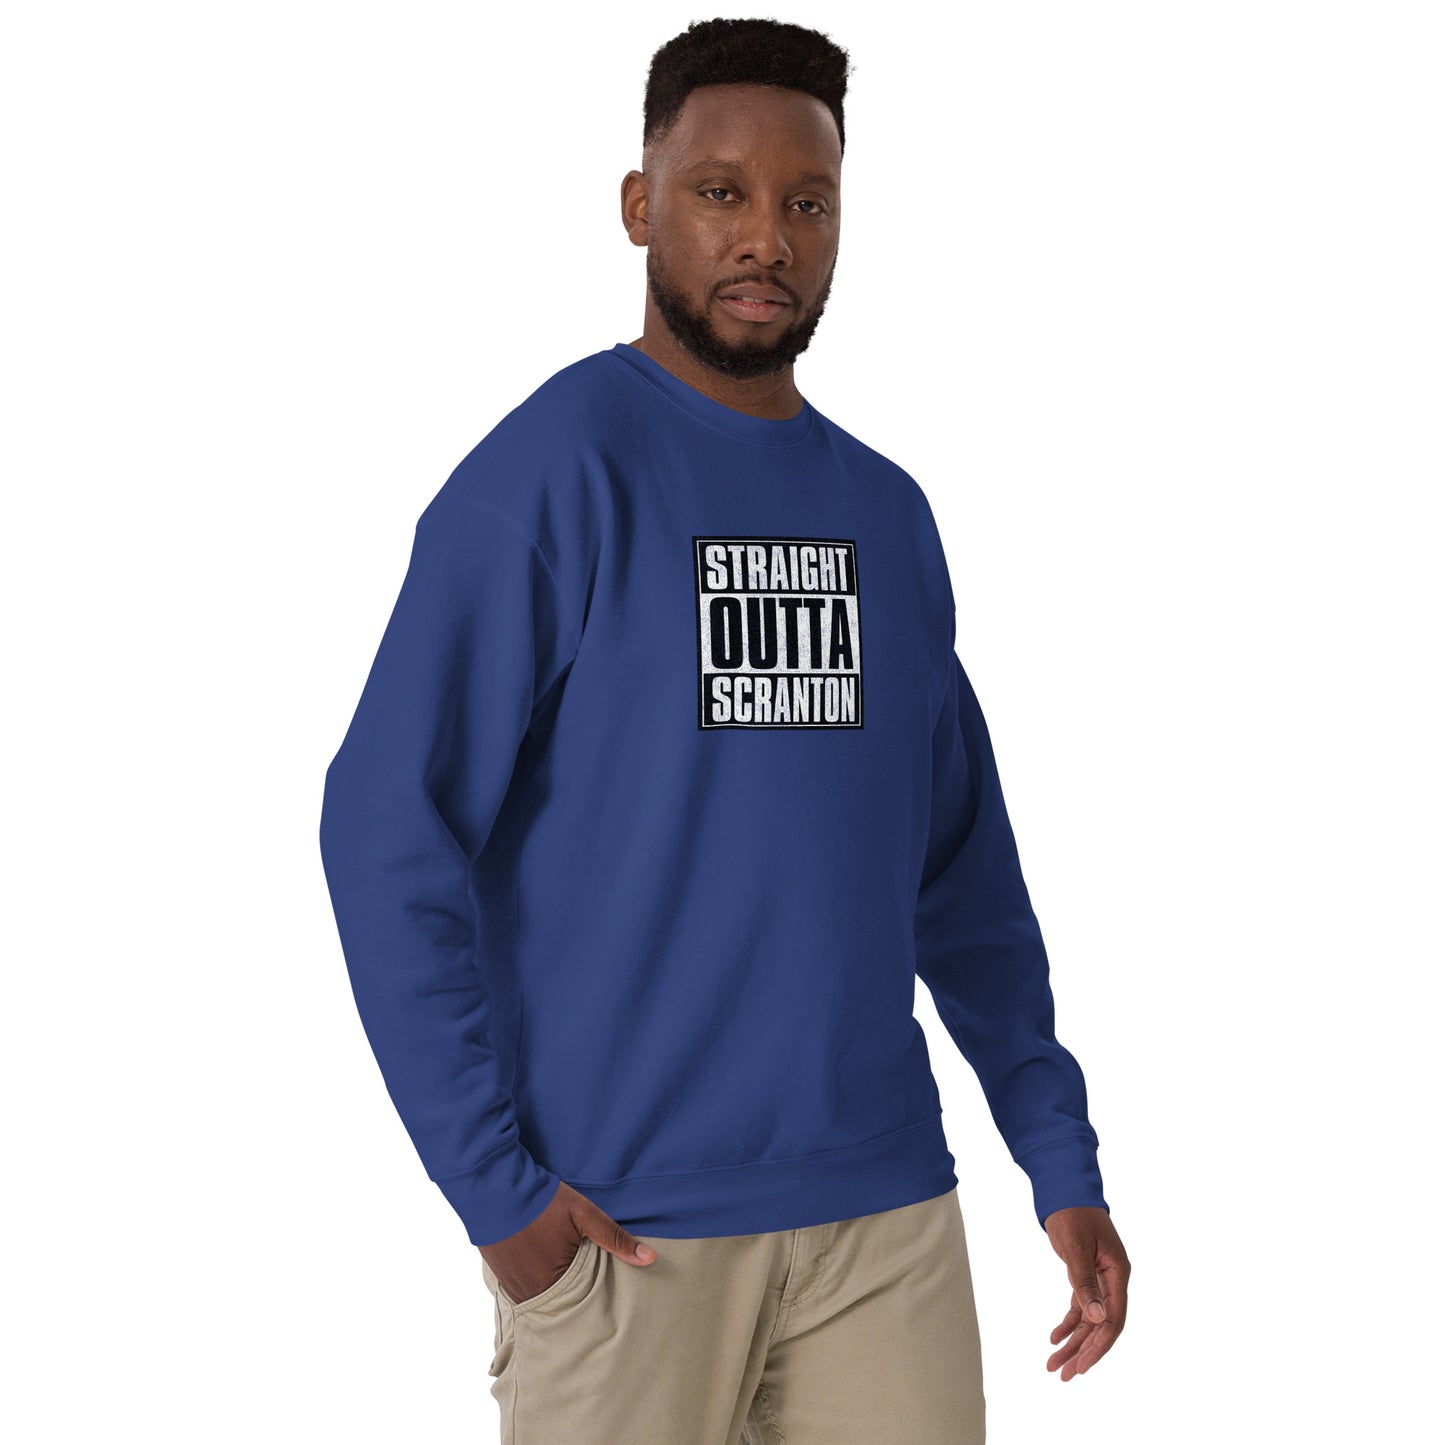 Straight Outta Scranton Unisex Premium Sweatshirt